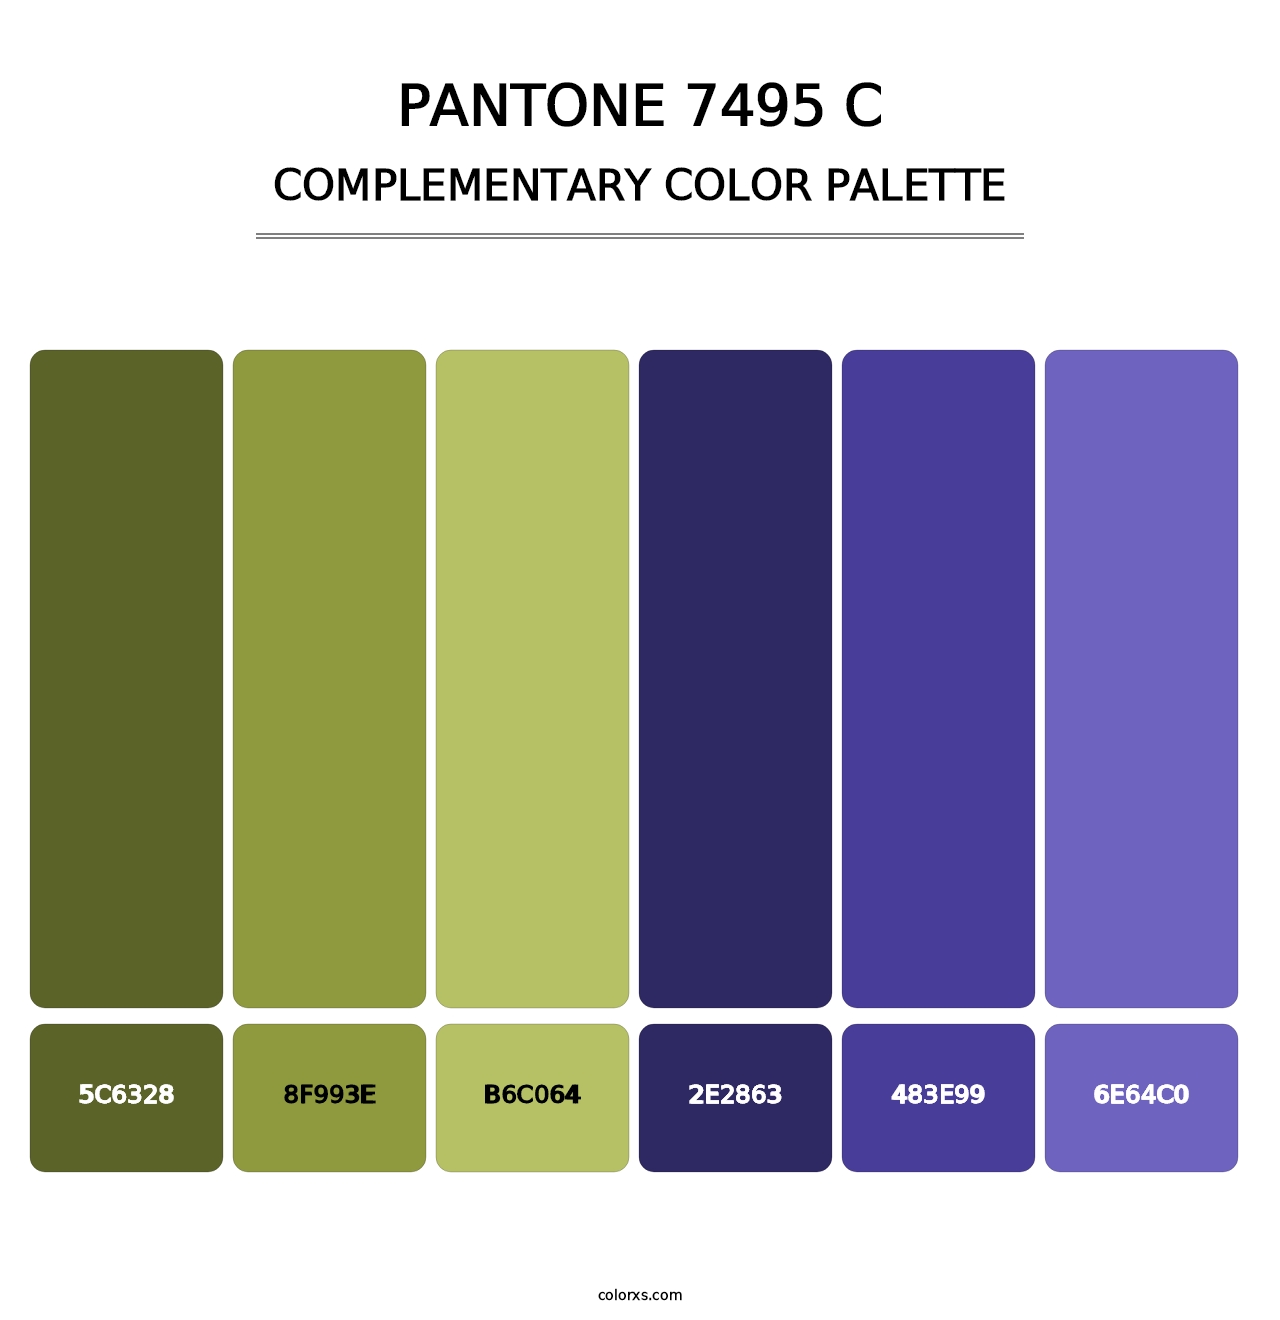 PANTONE 7495 C - Complementary Color Palette